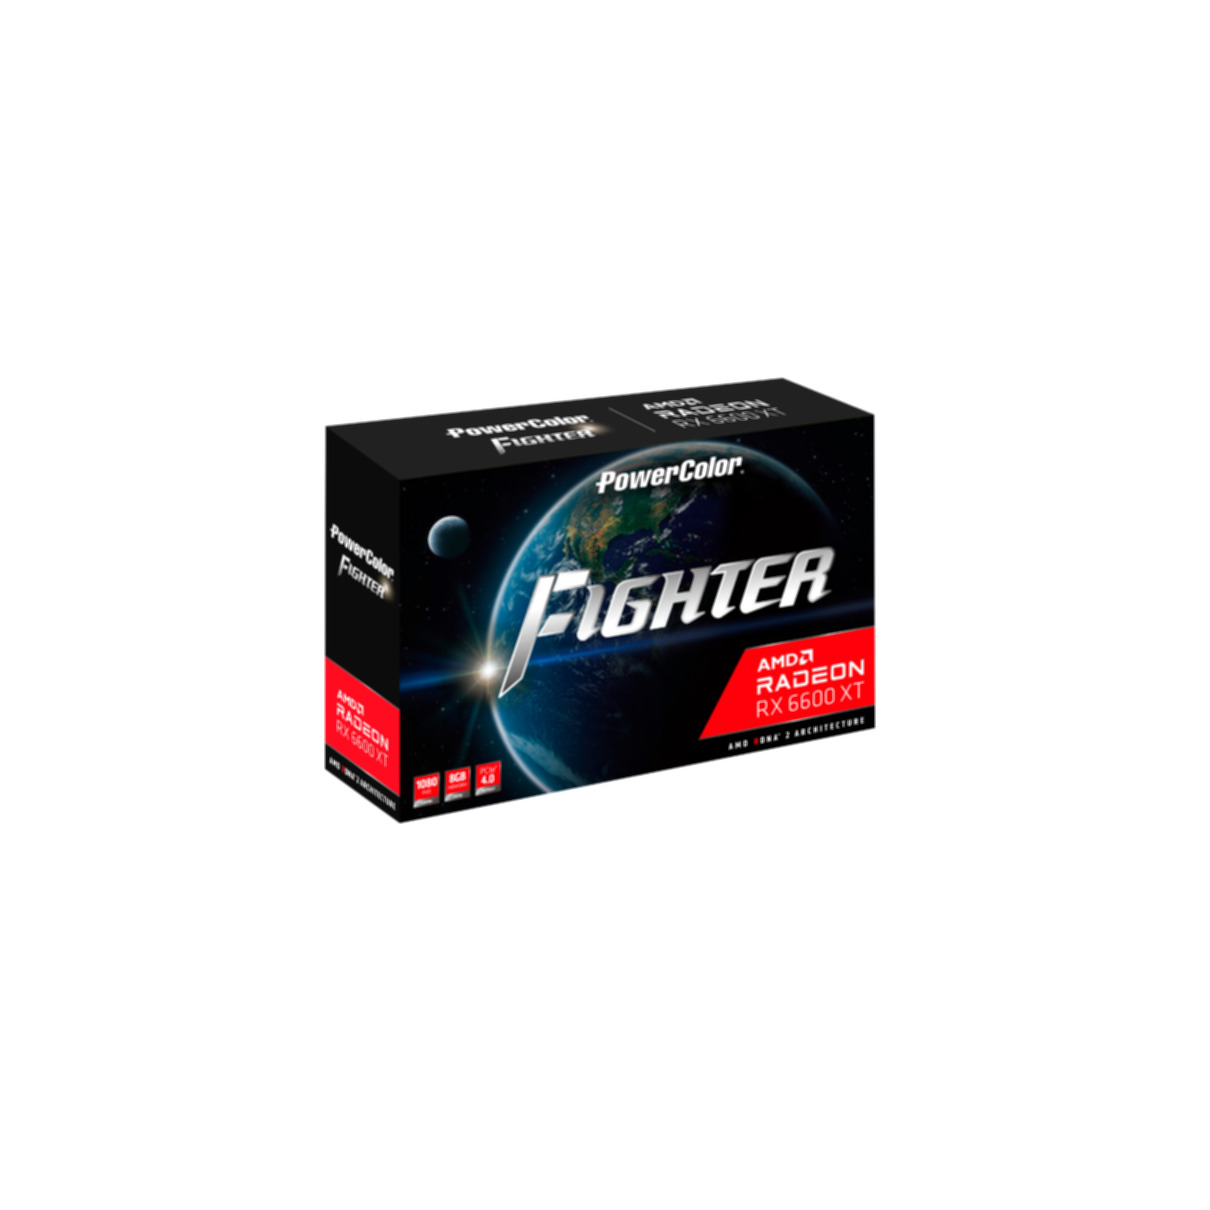 POWERCOLOR Fighter RX (AMD, Grafikkarte) 6600XT